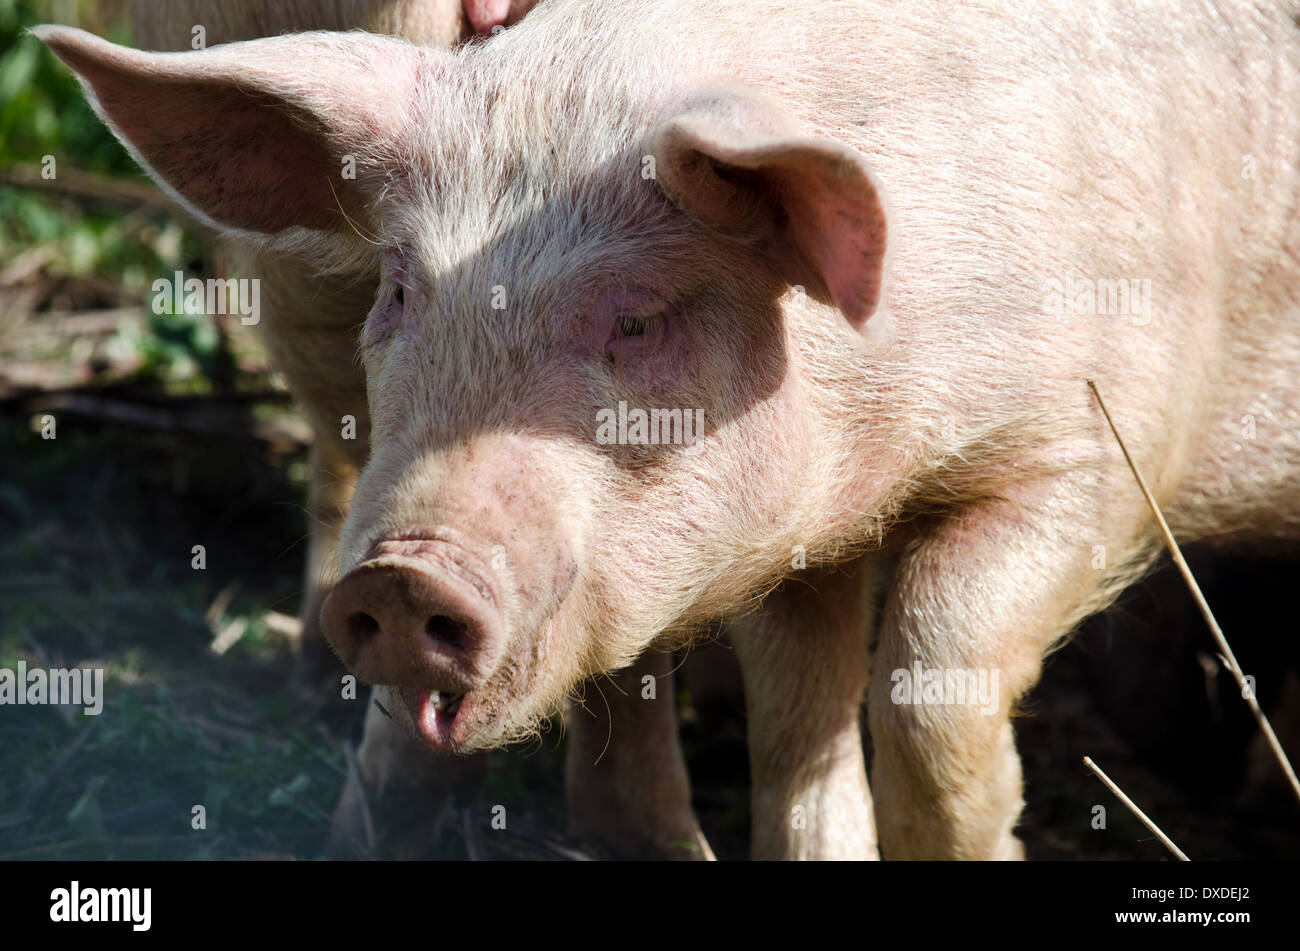 Closeup of head of a pig Stock Photo